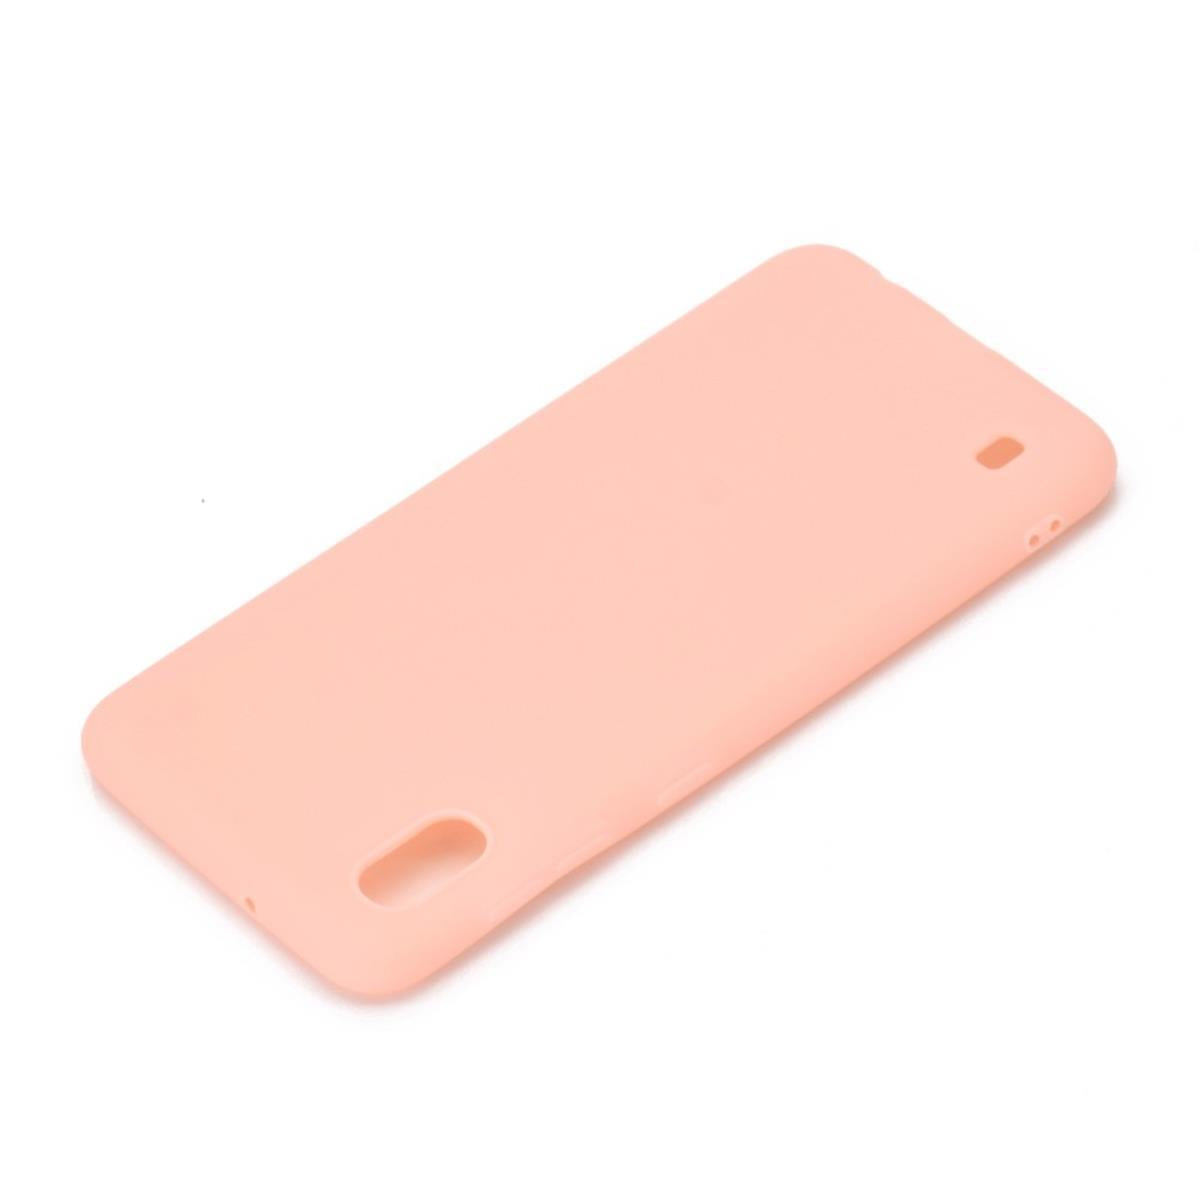 Hülle für Samsung Galaxy A10 Silikon Cover Bumper Schutzhülle Case matt Rosa